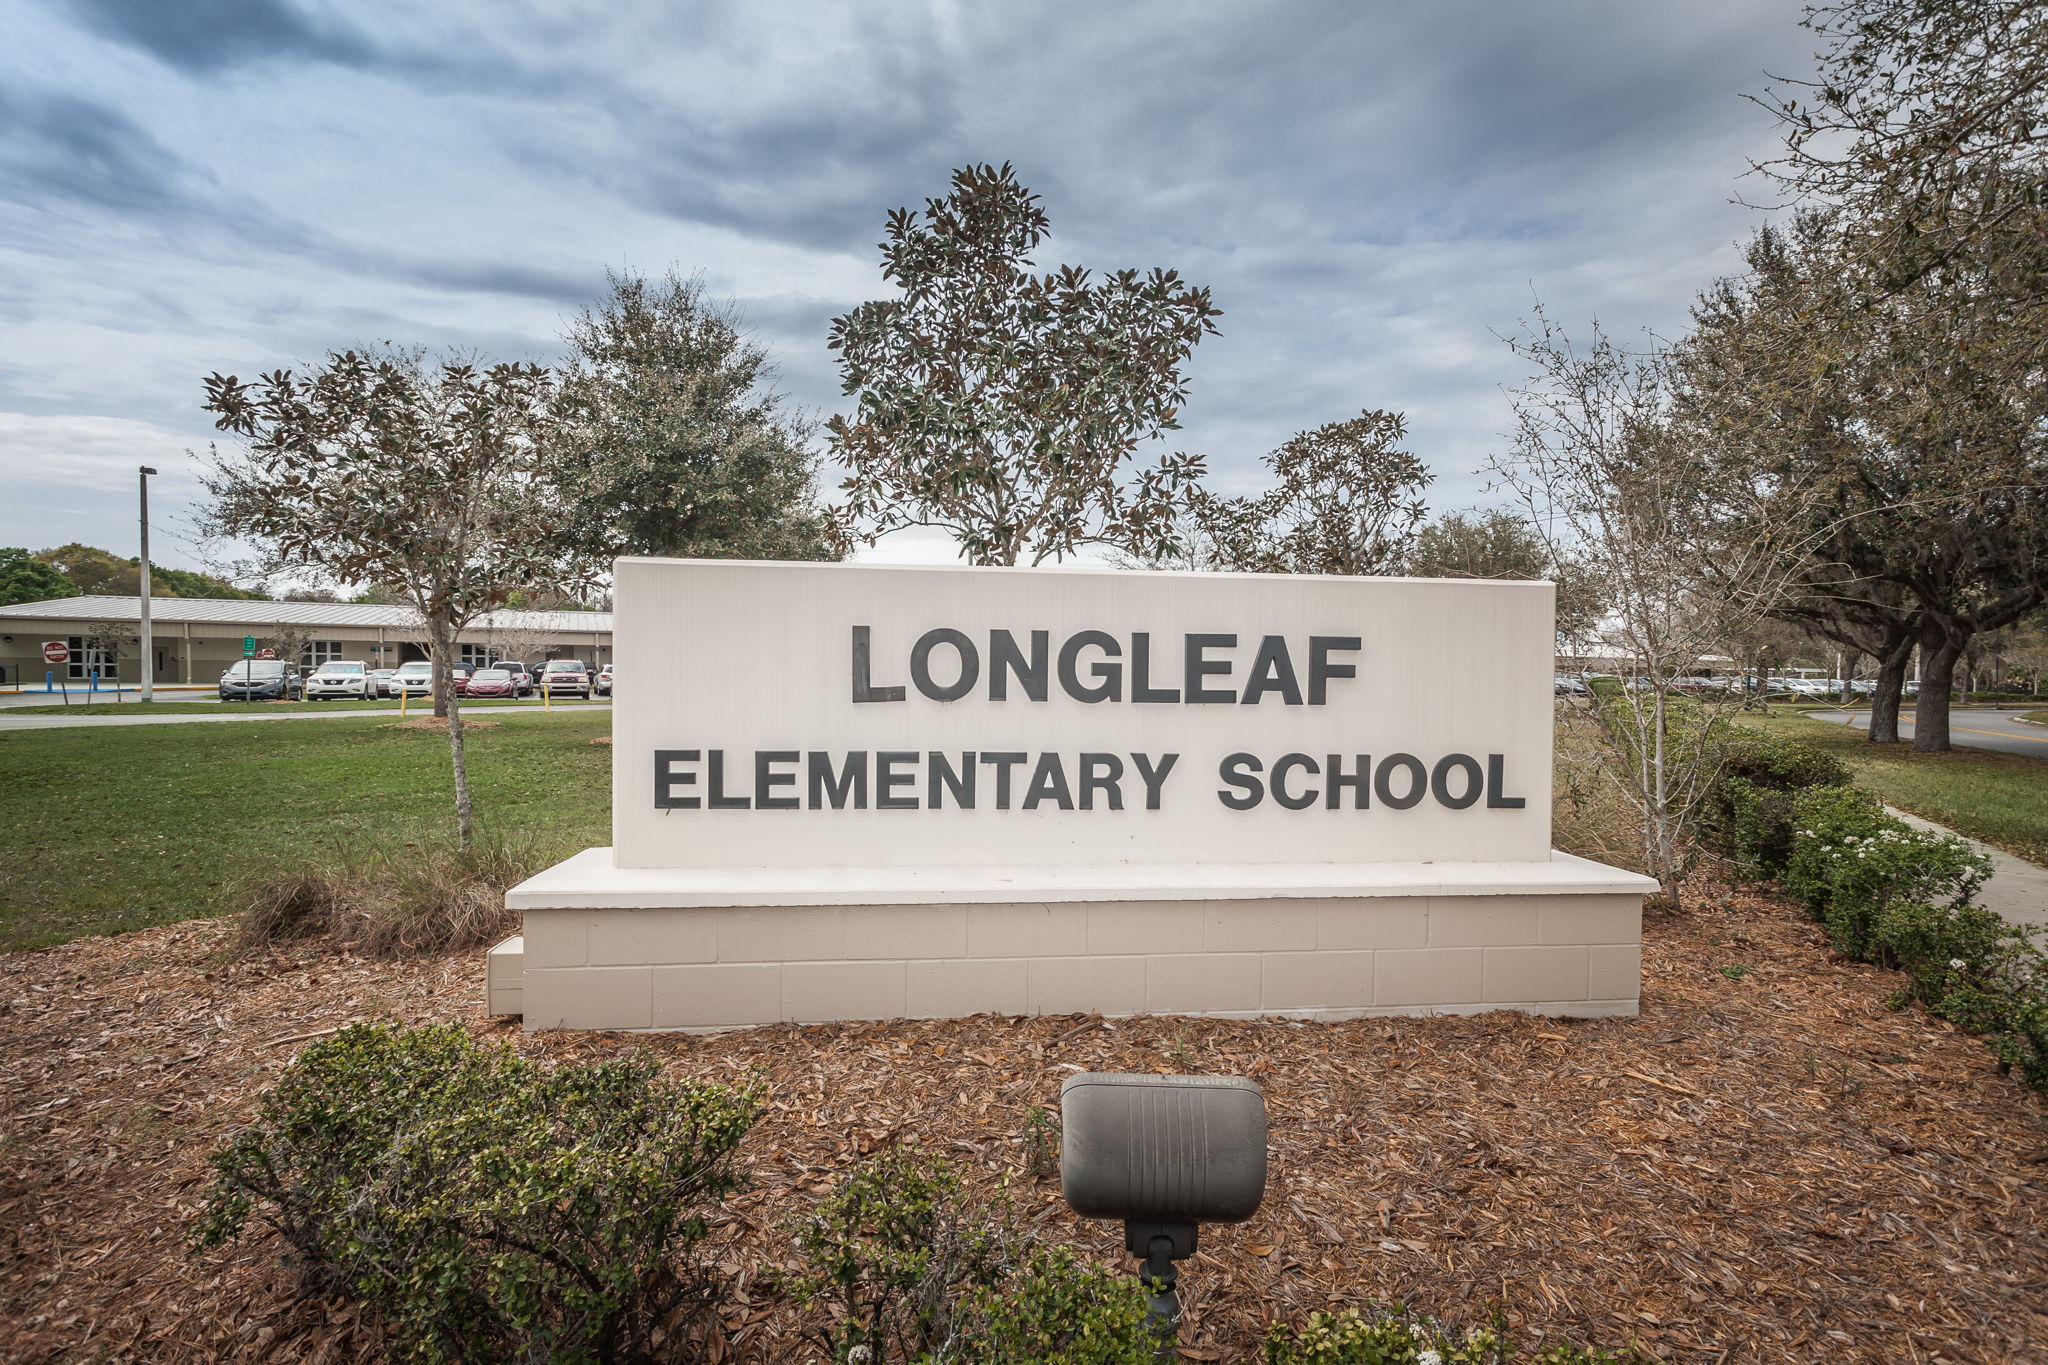 Longleaf Elementary